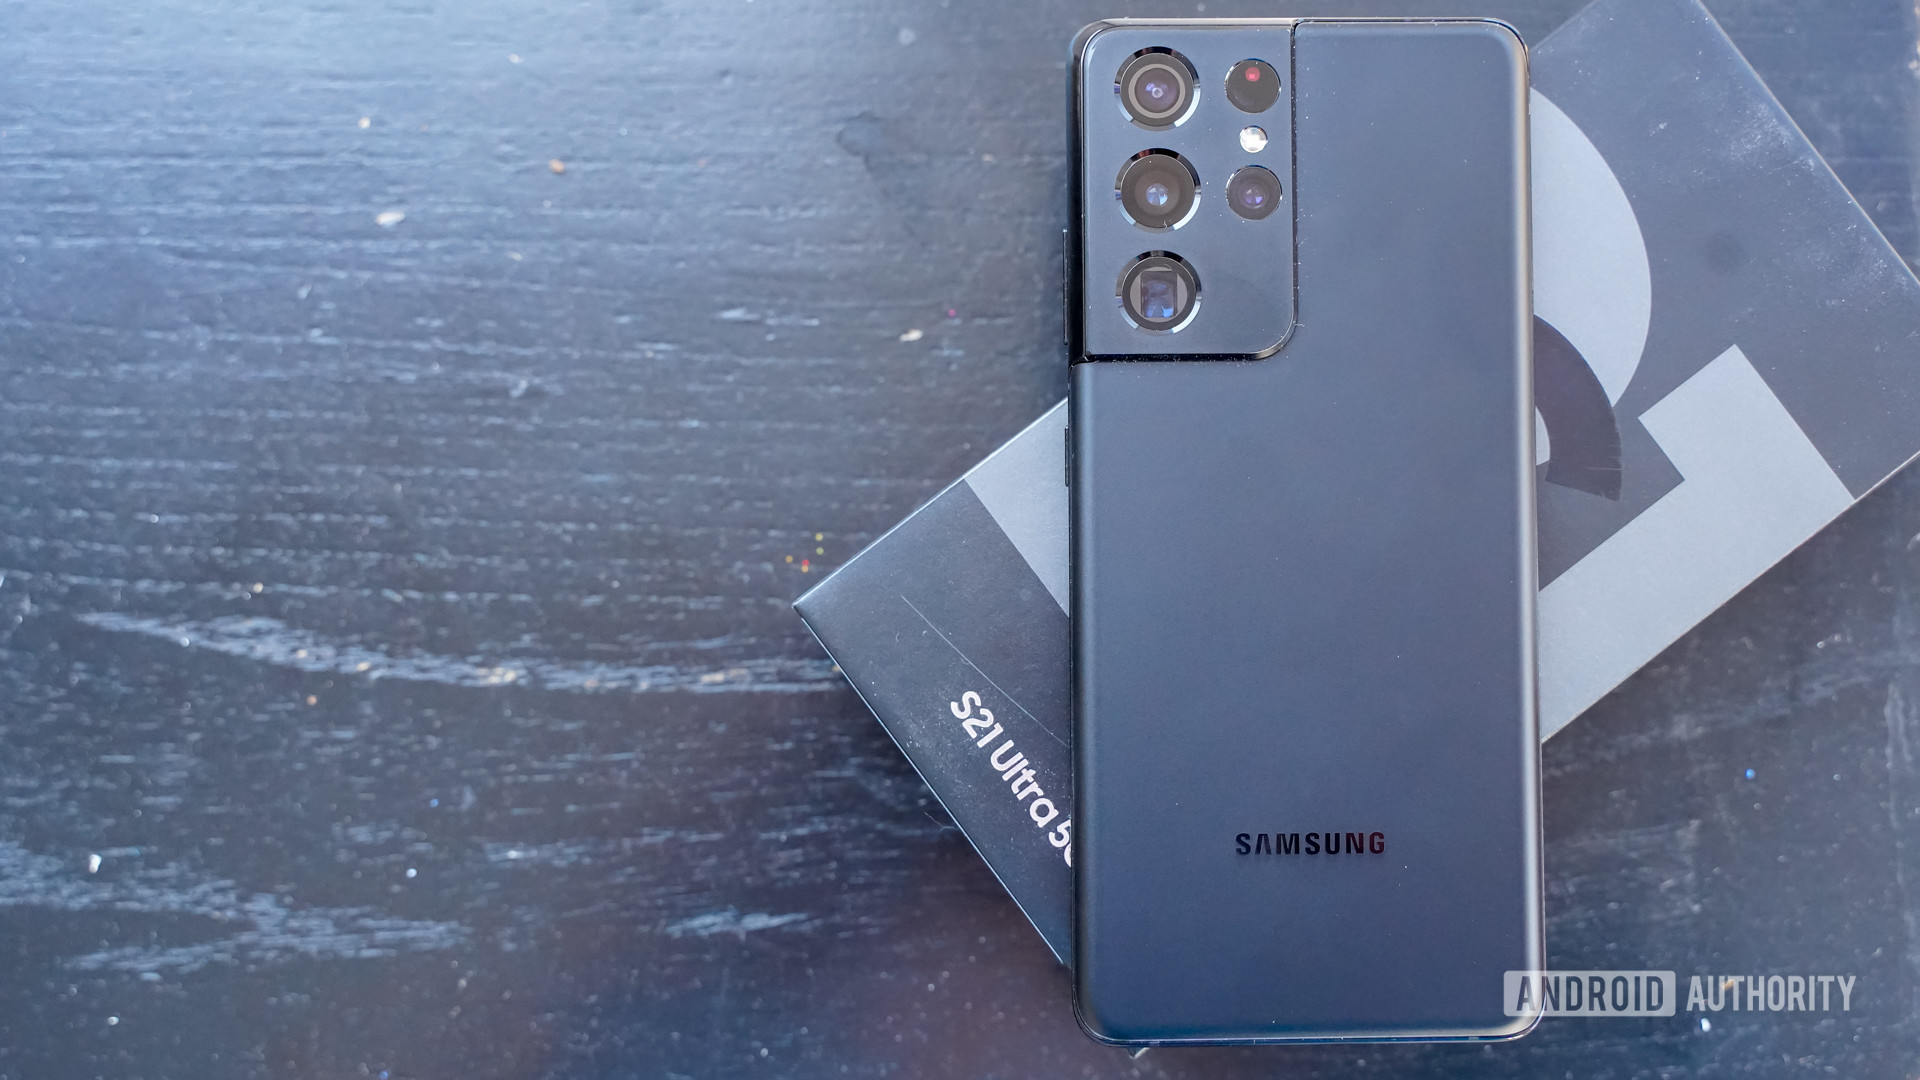 Samsung Galaxy S21 Ultra 5G on the box